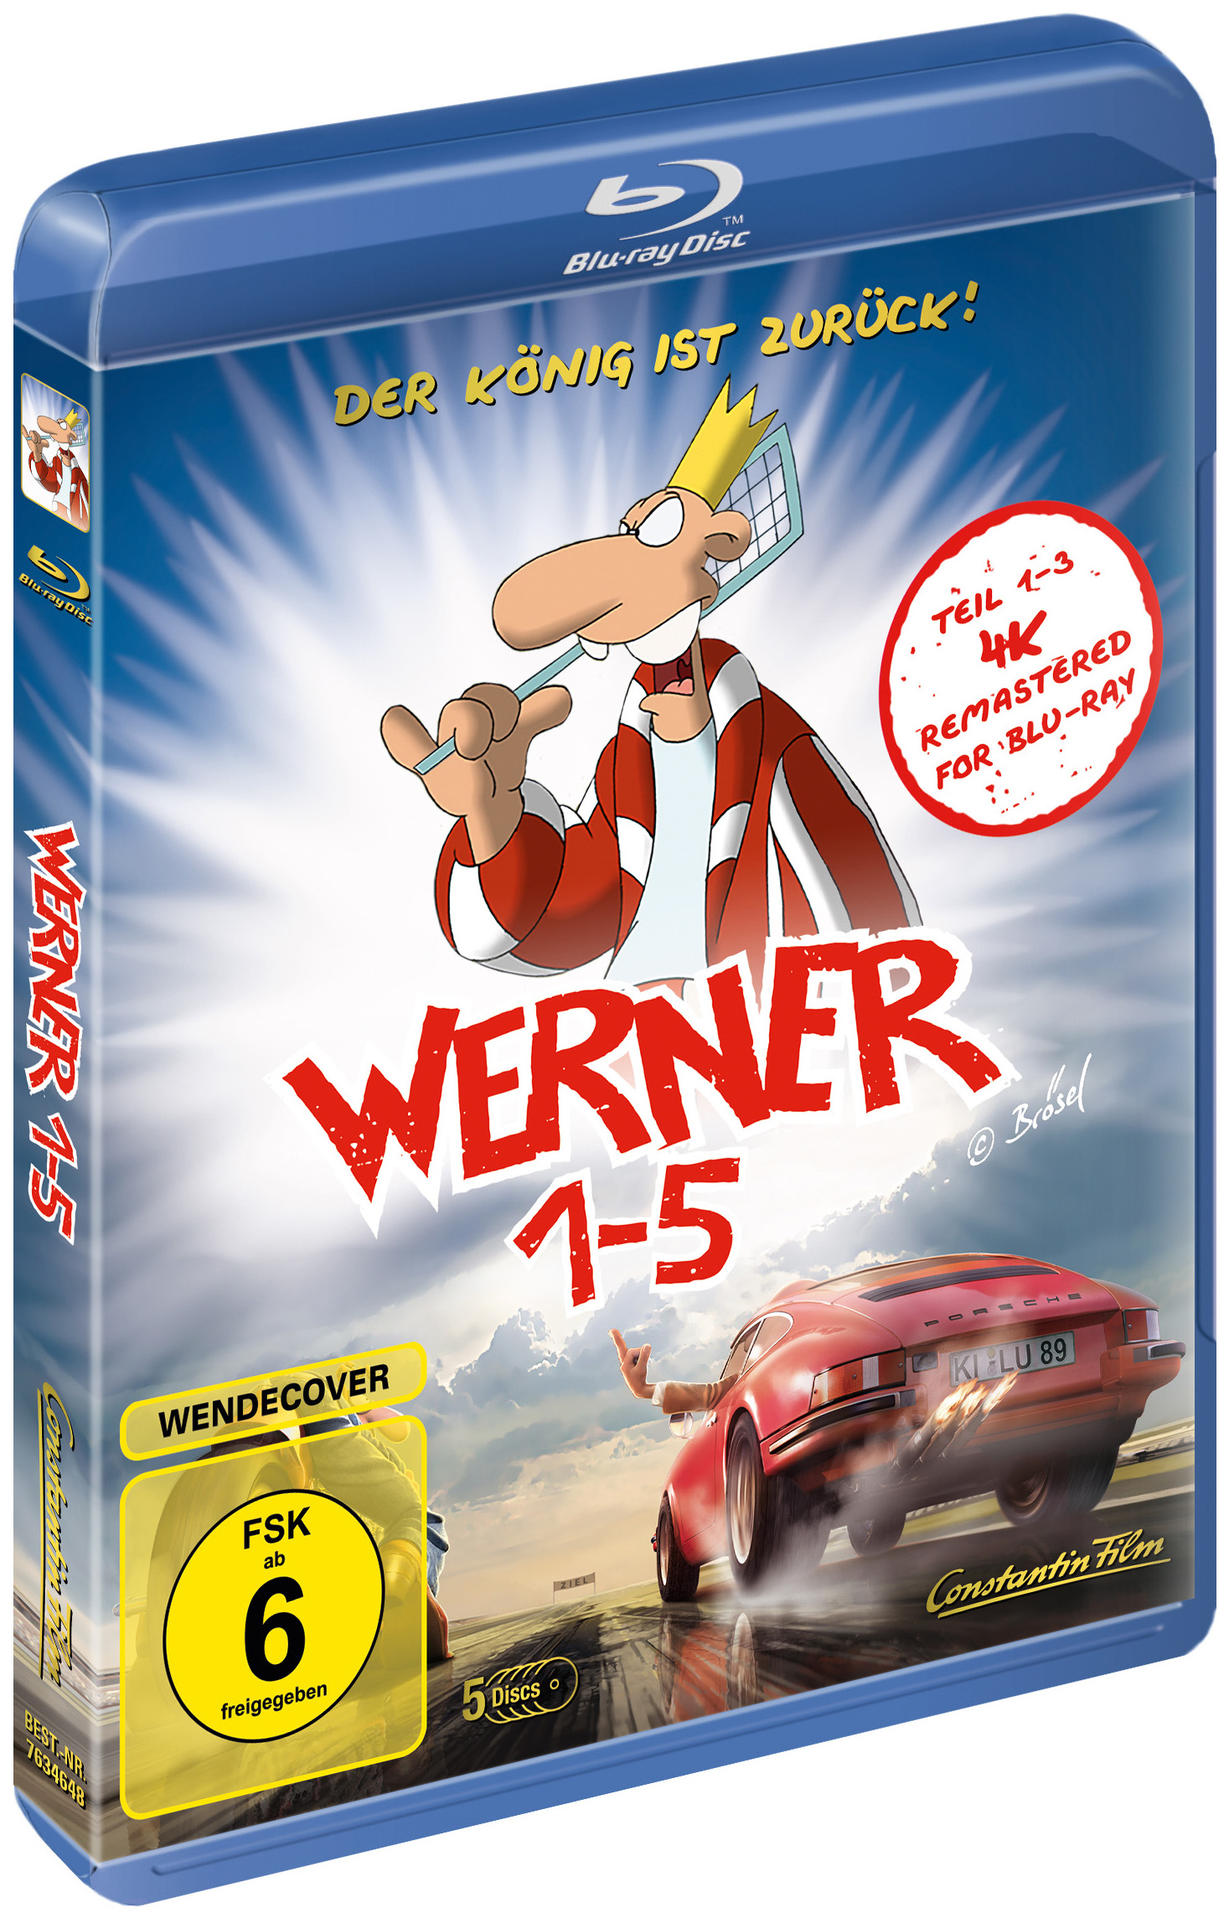 Königbox 1-5 Werner Blu-ray